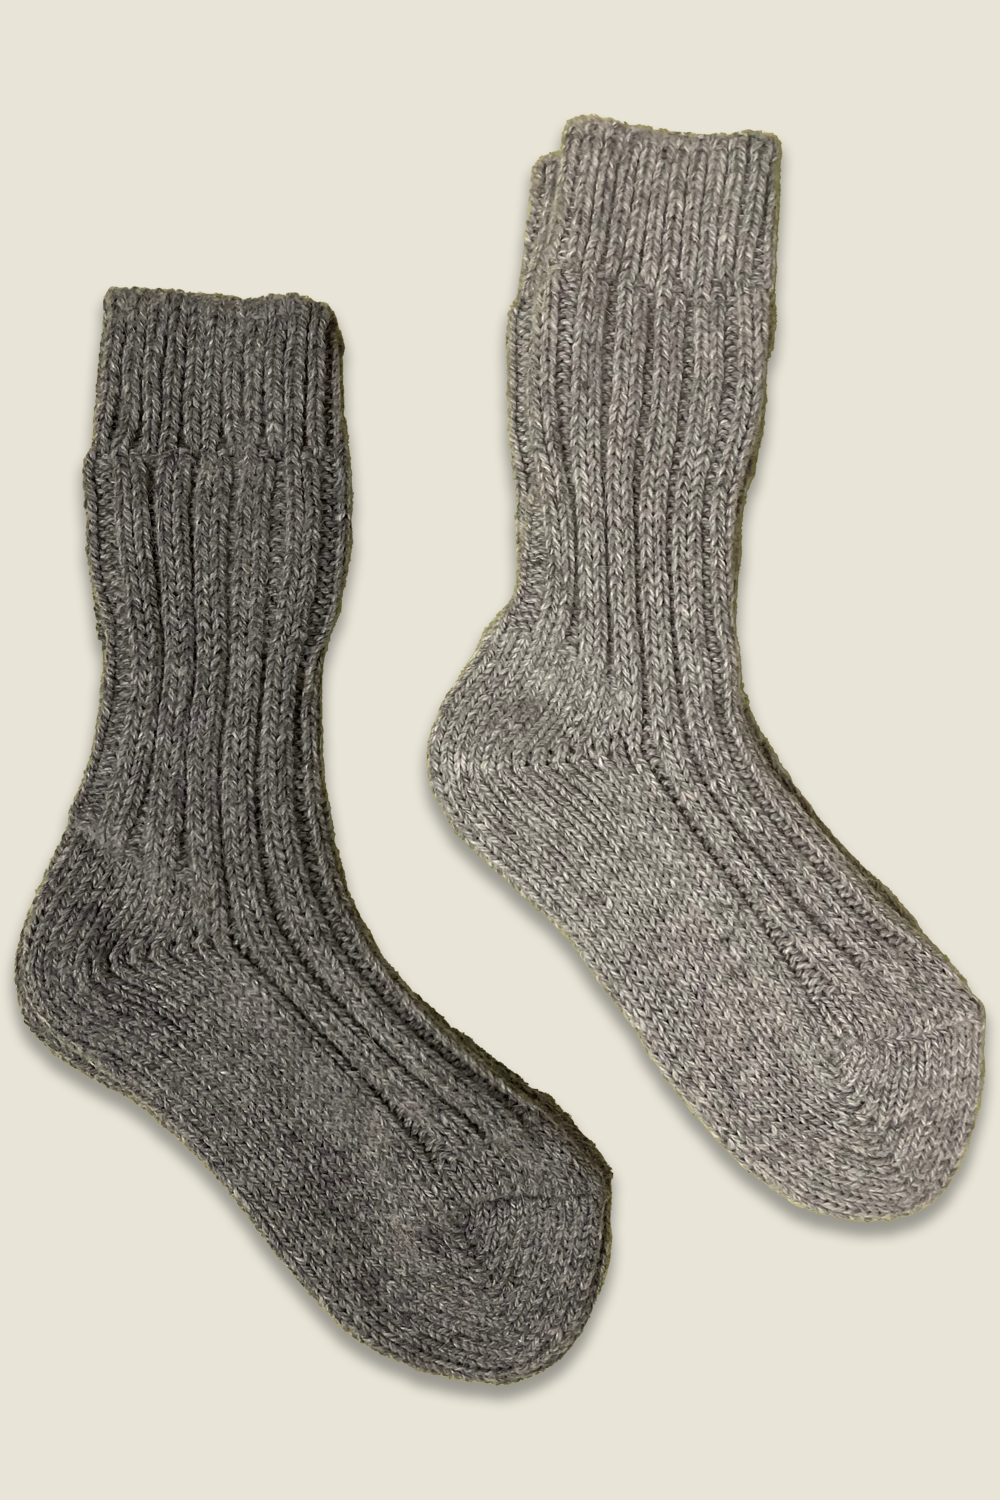 Alpaka-Socken - grau und dunkelgrau - 2 Paar